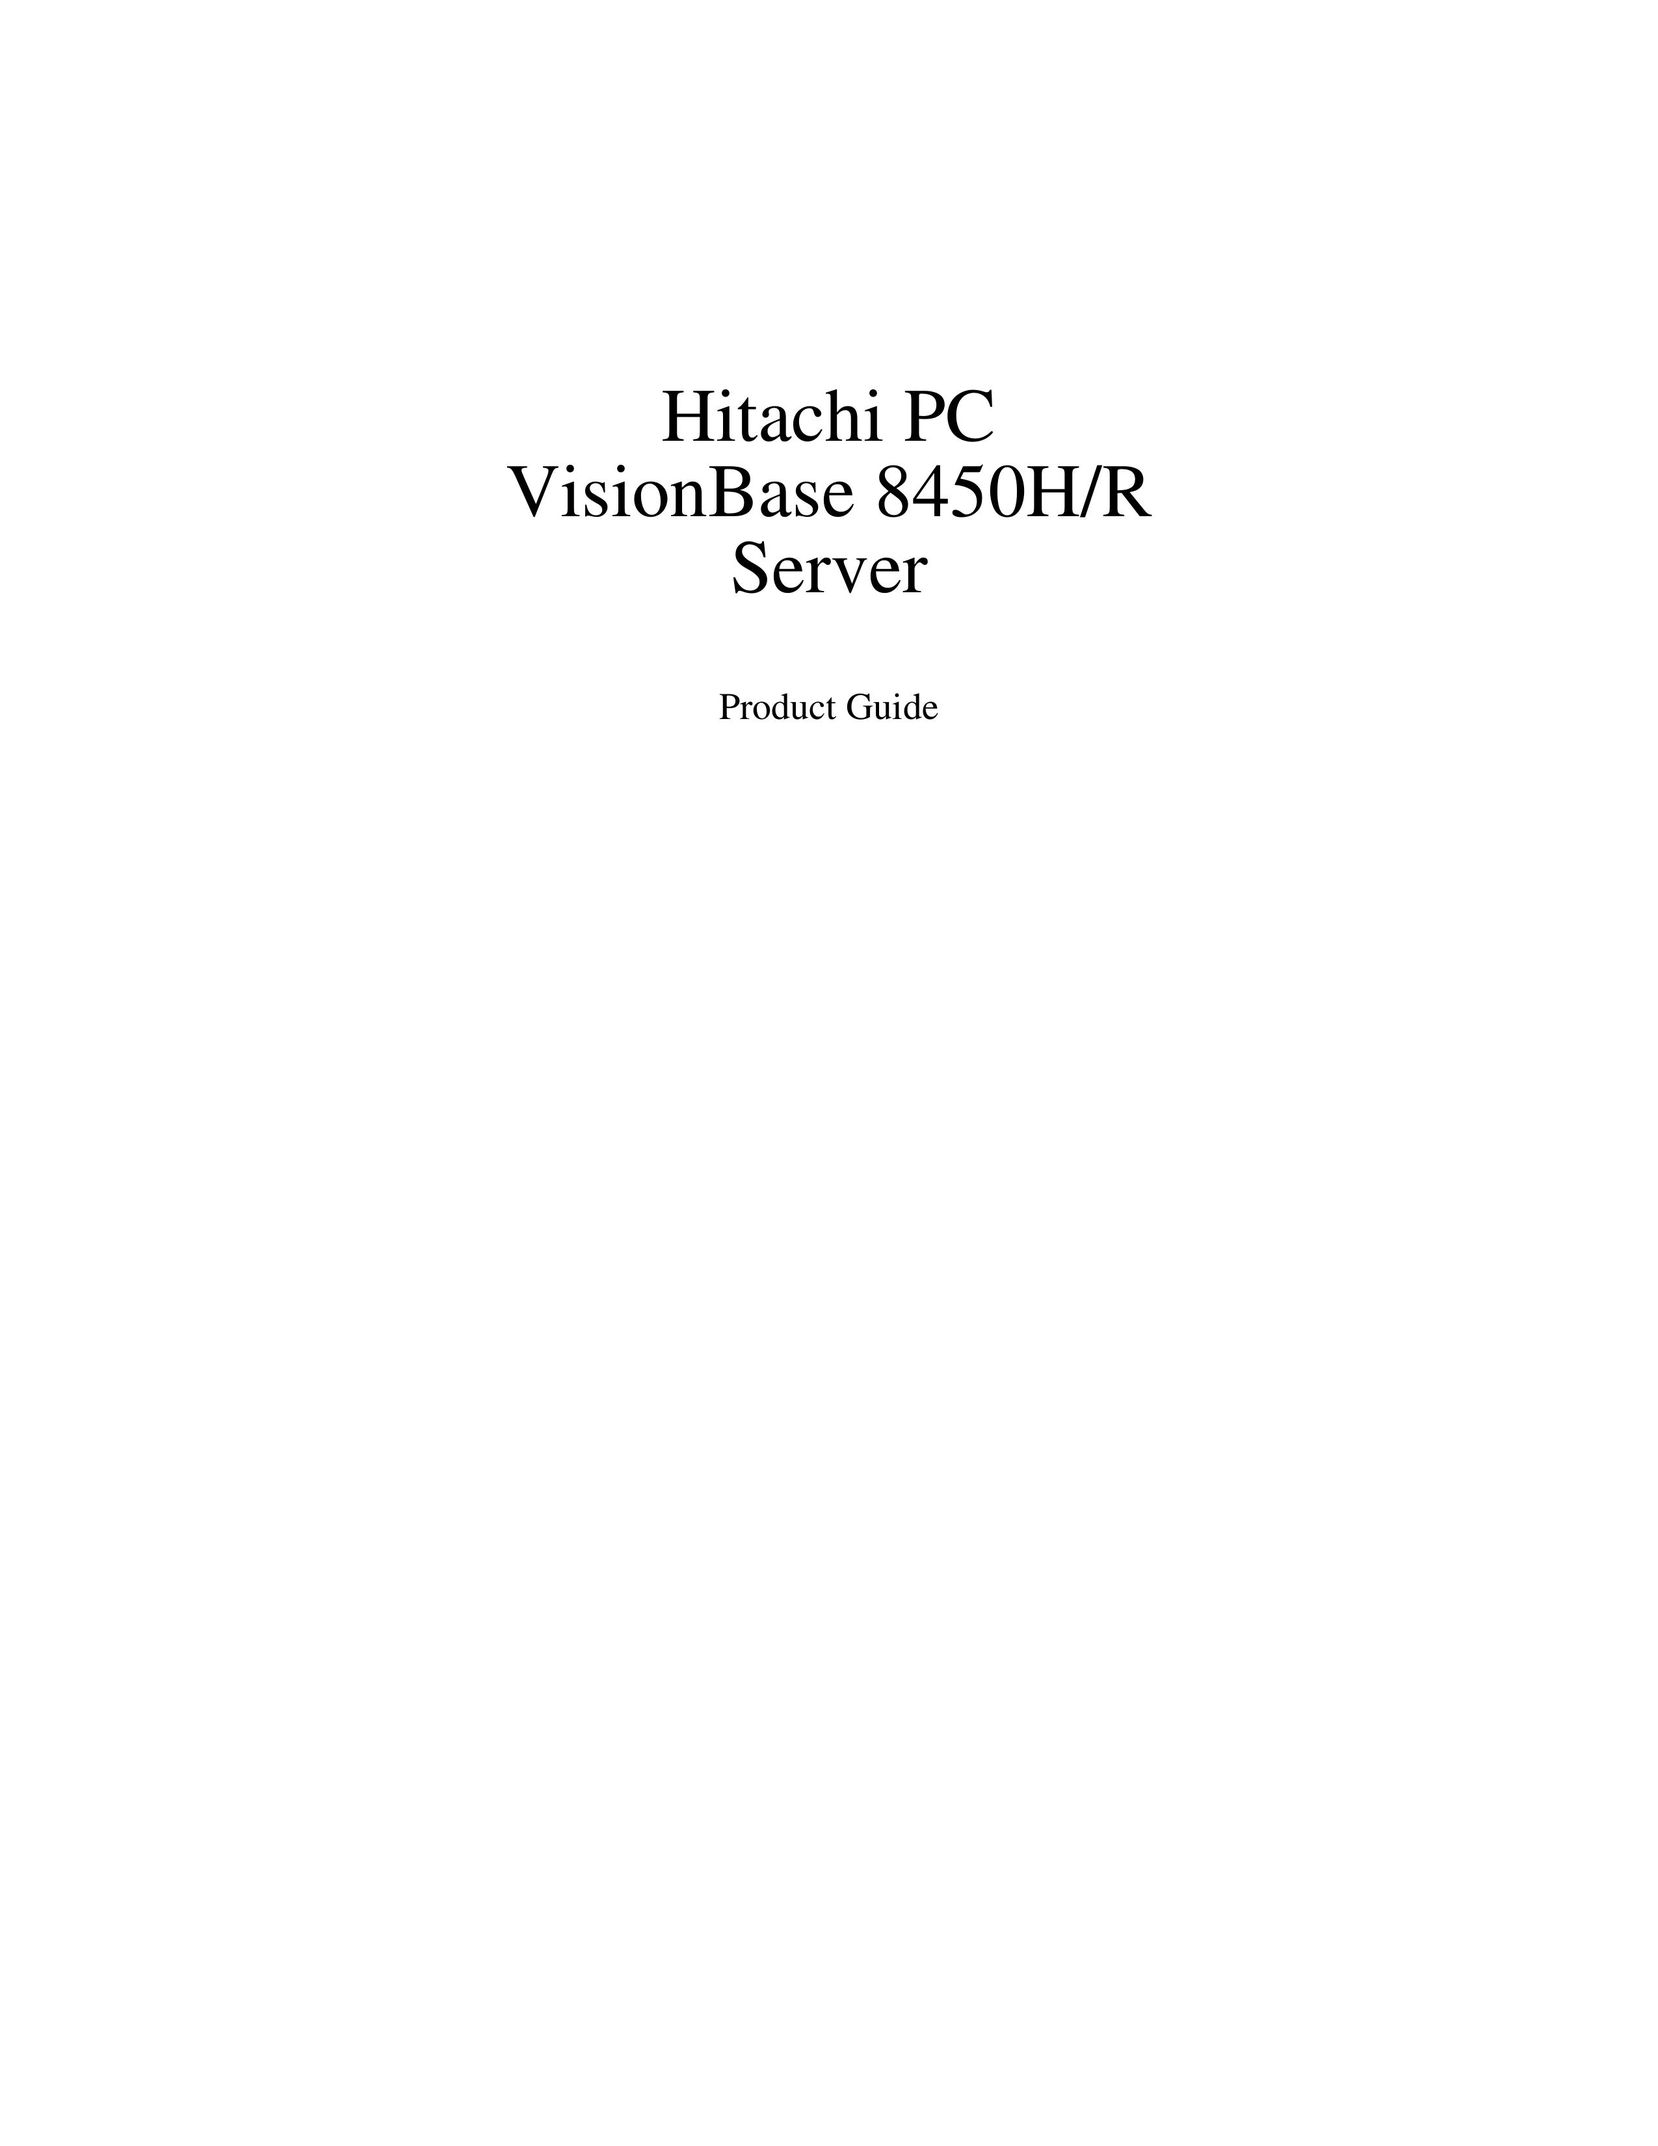 Hitachi 8450H/R Server User Manual